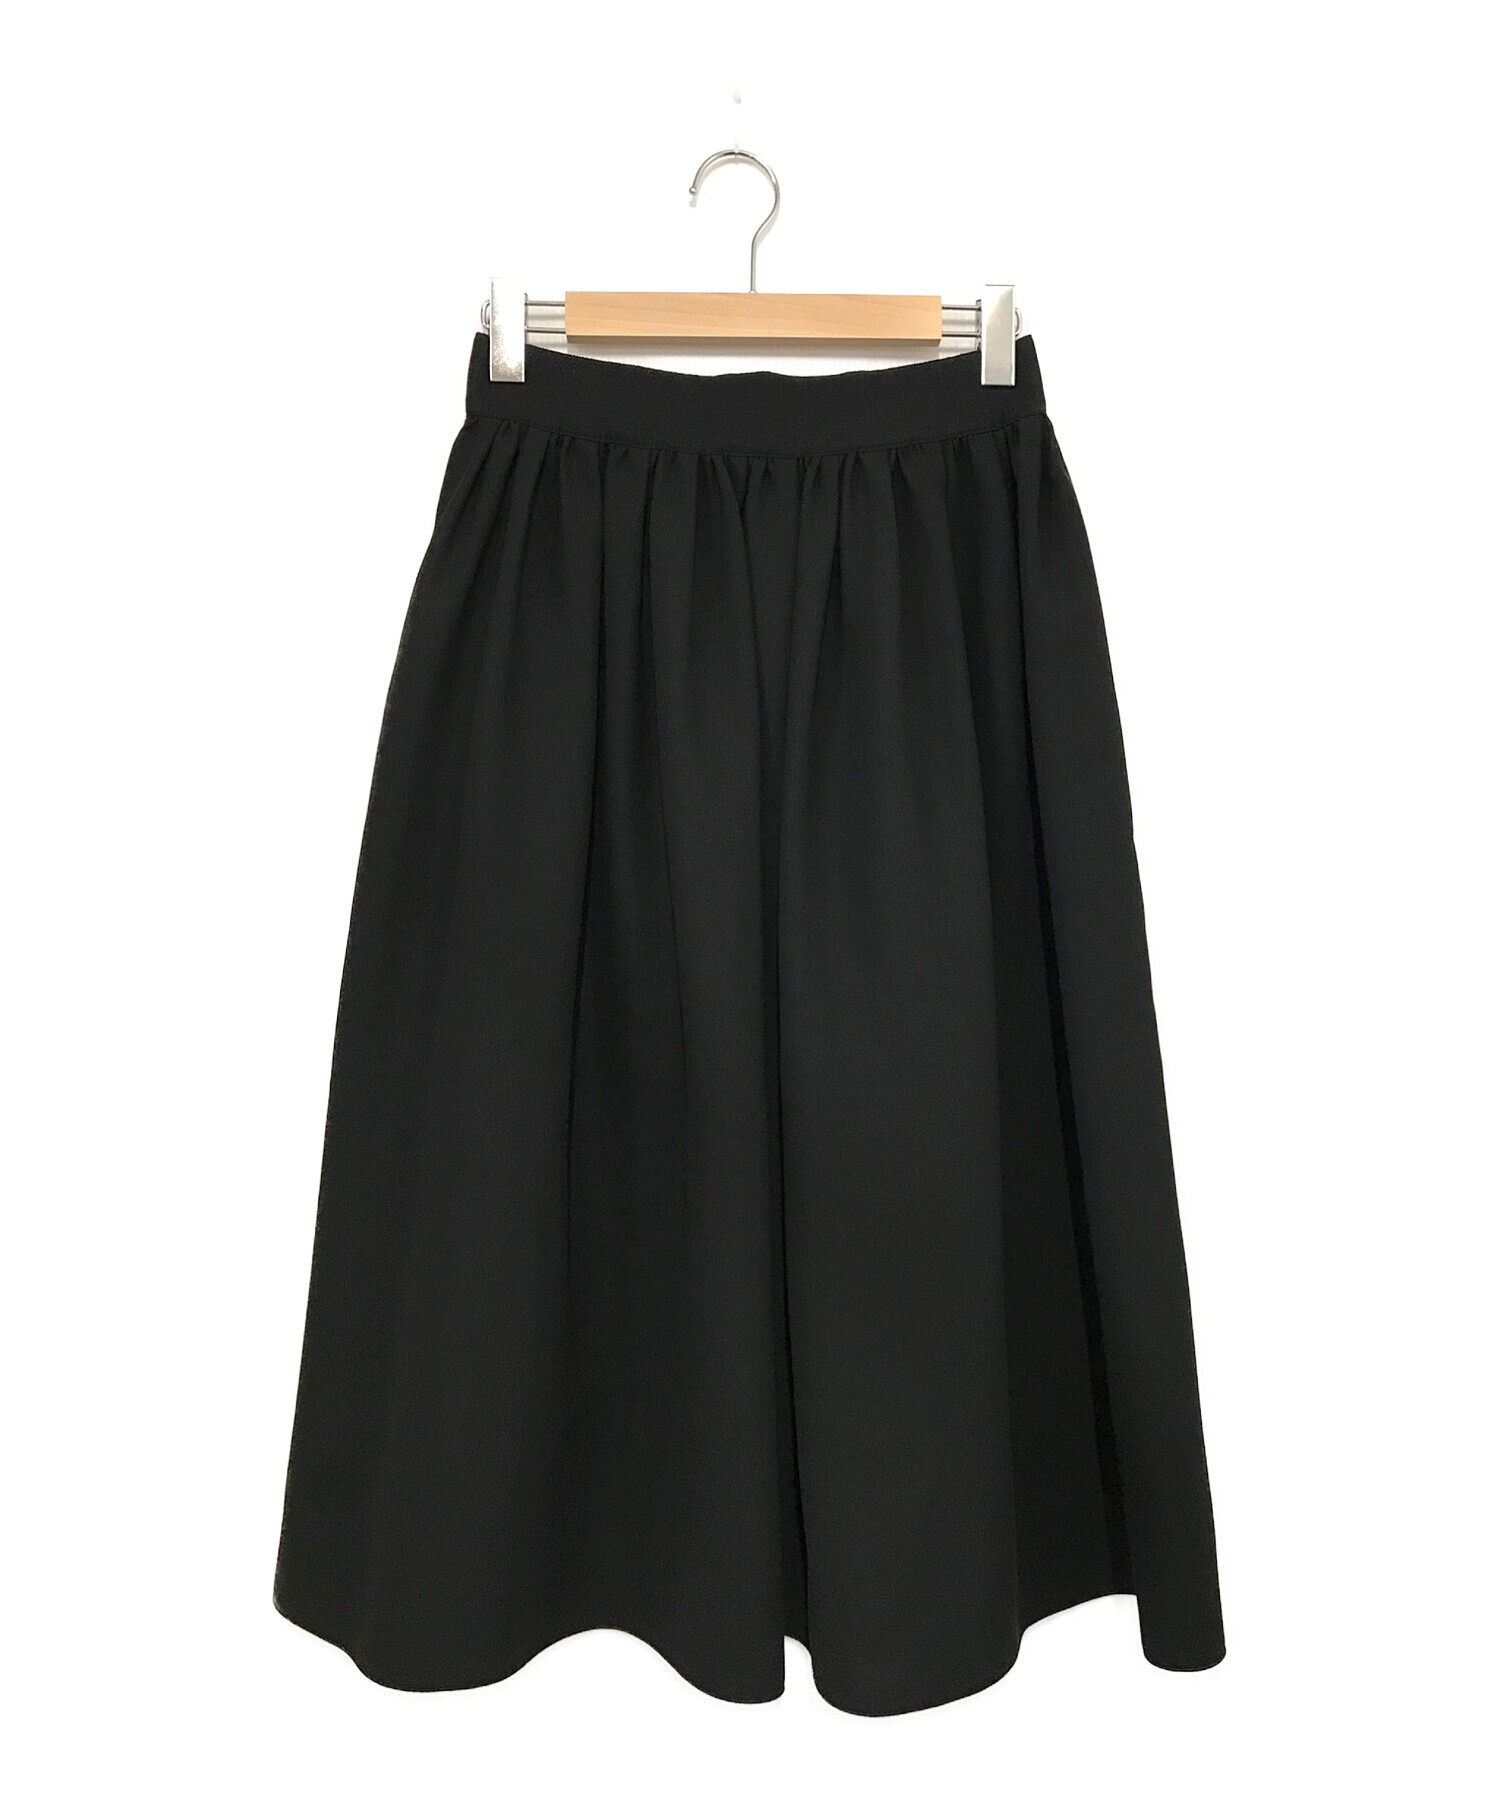 ebure (エブール) フレアスカート ブラック サイズ:38